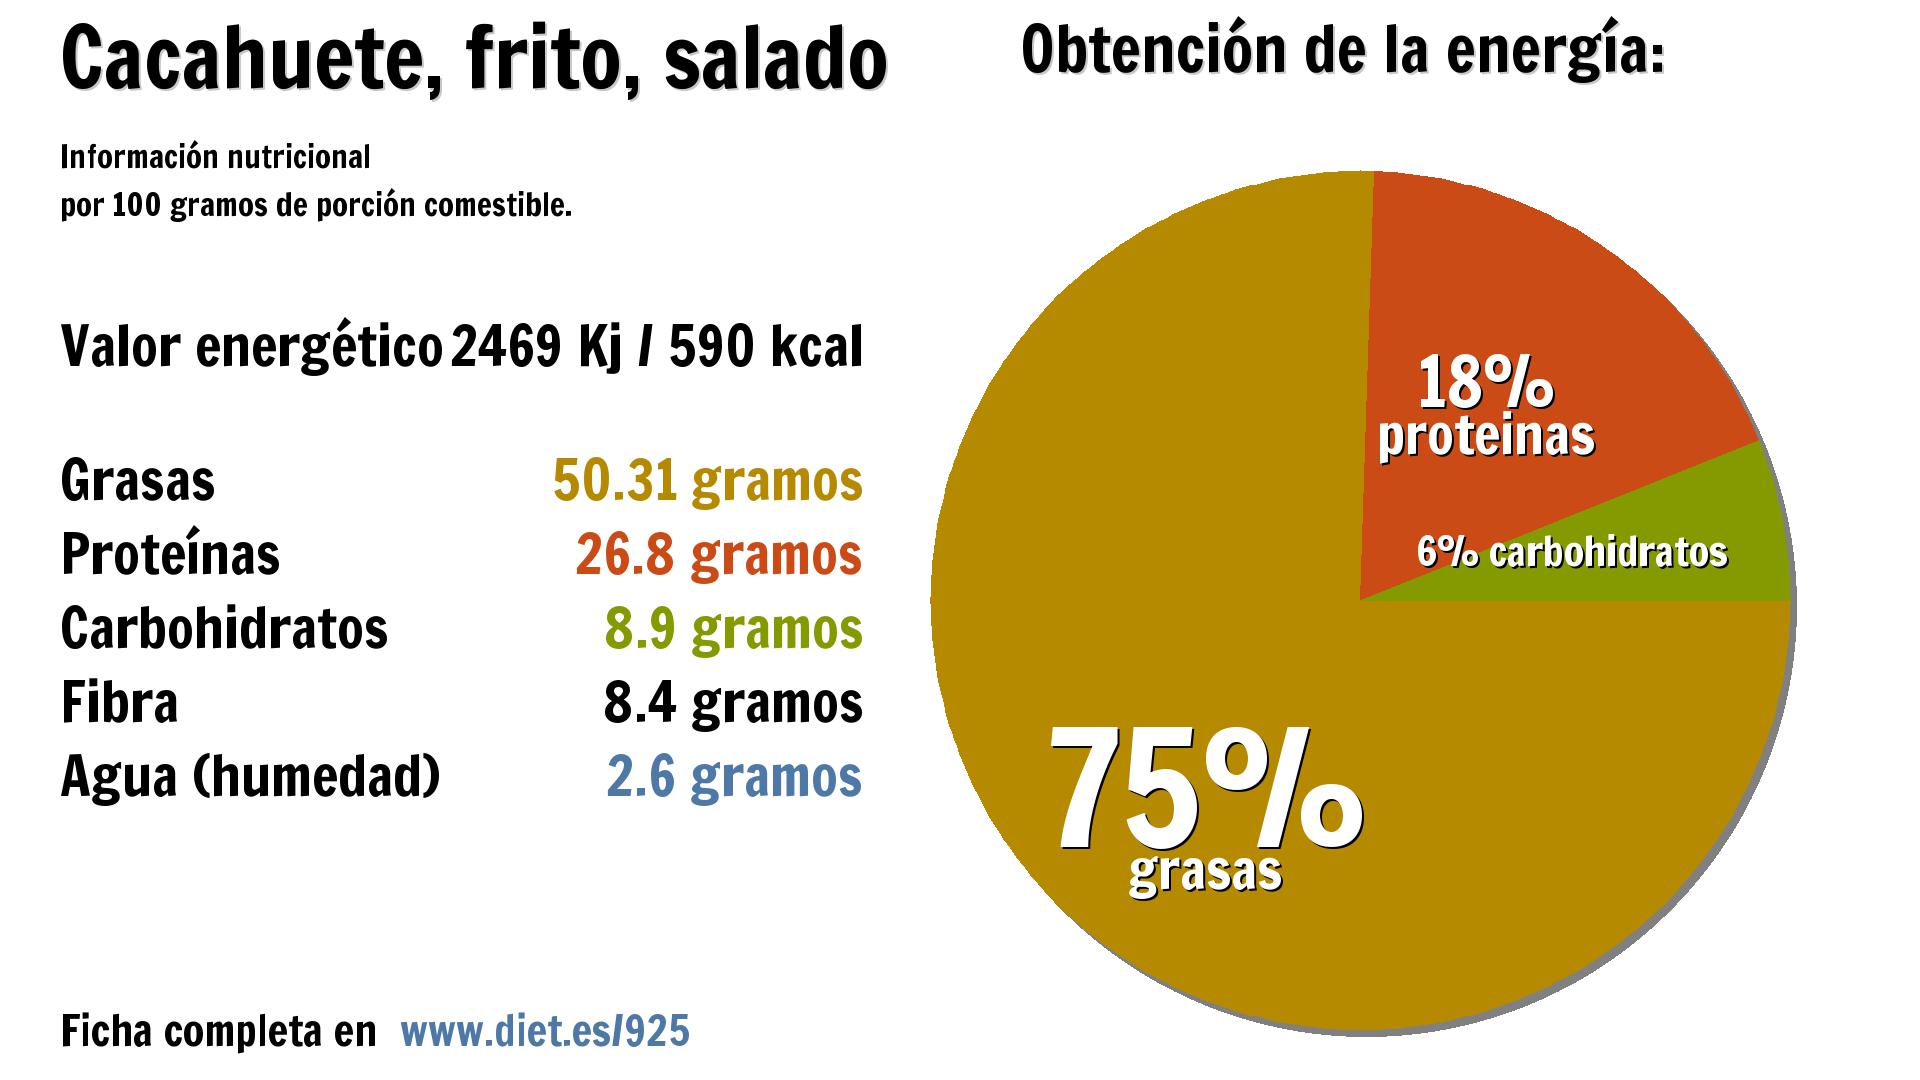 Cacahuete, frito, salado: energía 2469 Kj, grasas 50 g., proteínas 27 g., carbohidratos 9 g., fibra 8 g. y agua 3 g.